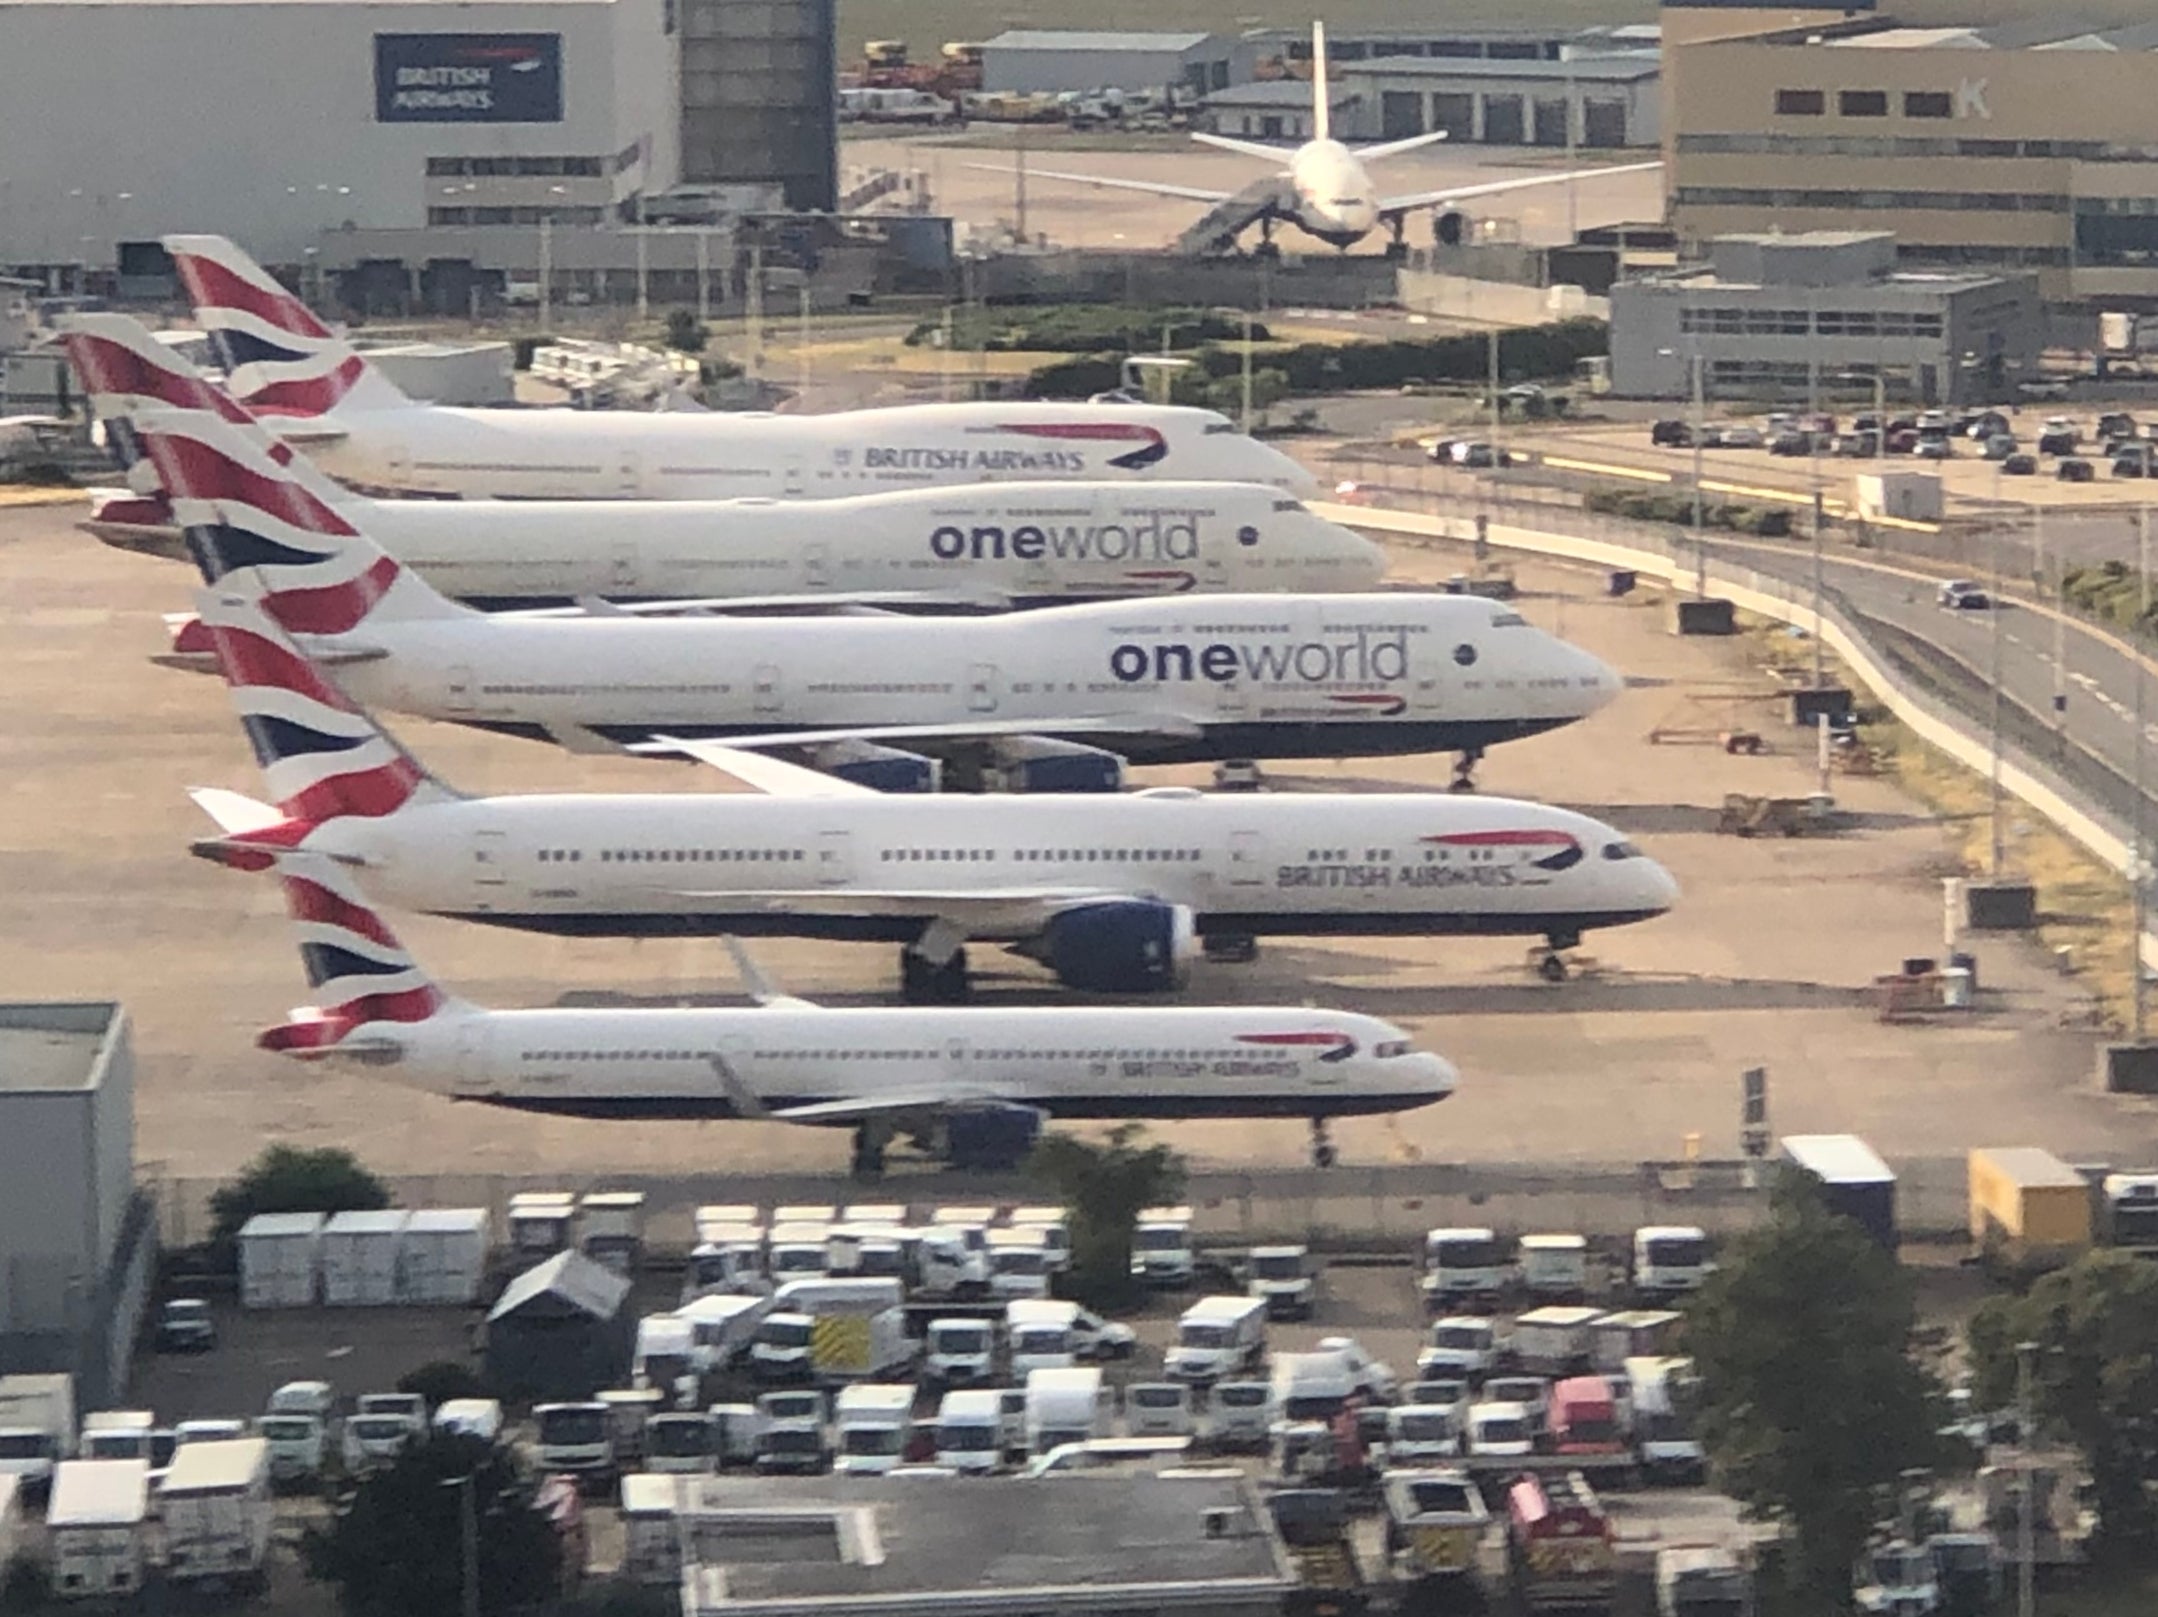 Departing soon: three British Airways 747s (top) awaiting disposal at Heathrow